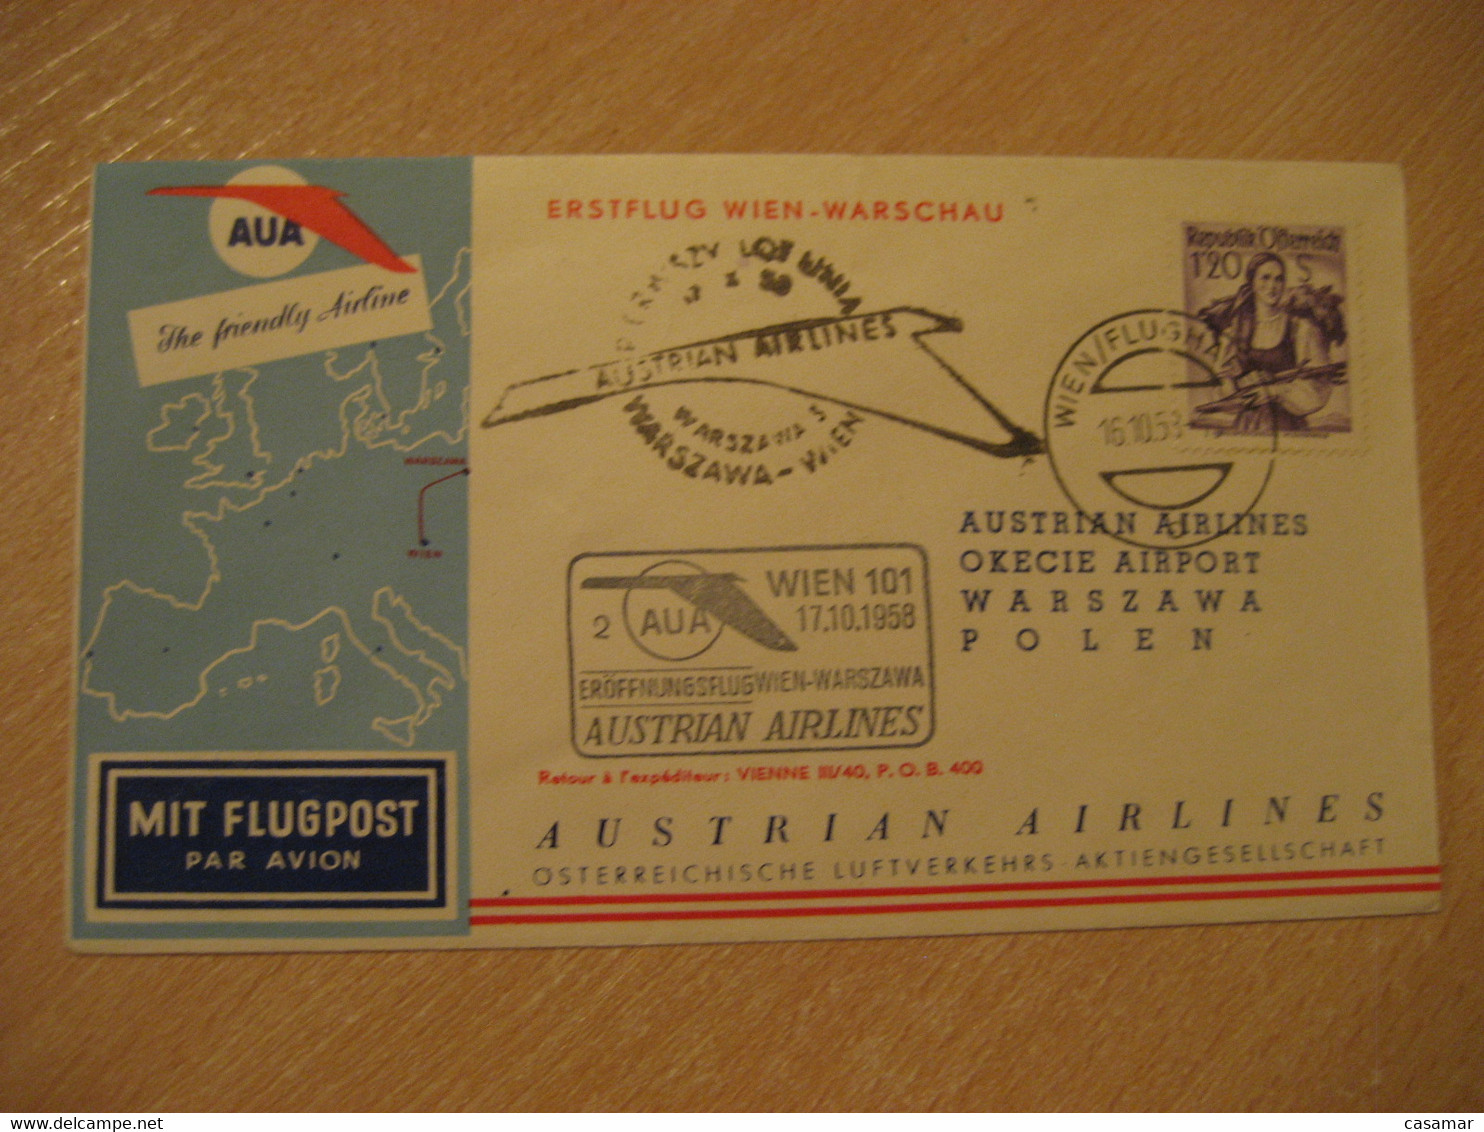 WARSZAWA Warsaw Wien 1958 AUA Austrian Airlines Airline First Flight Cancel Cover POLAND AUSTRIA - Avions